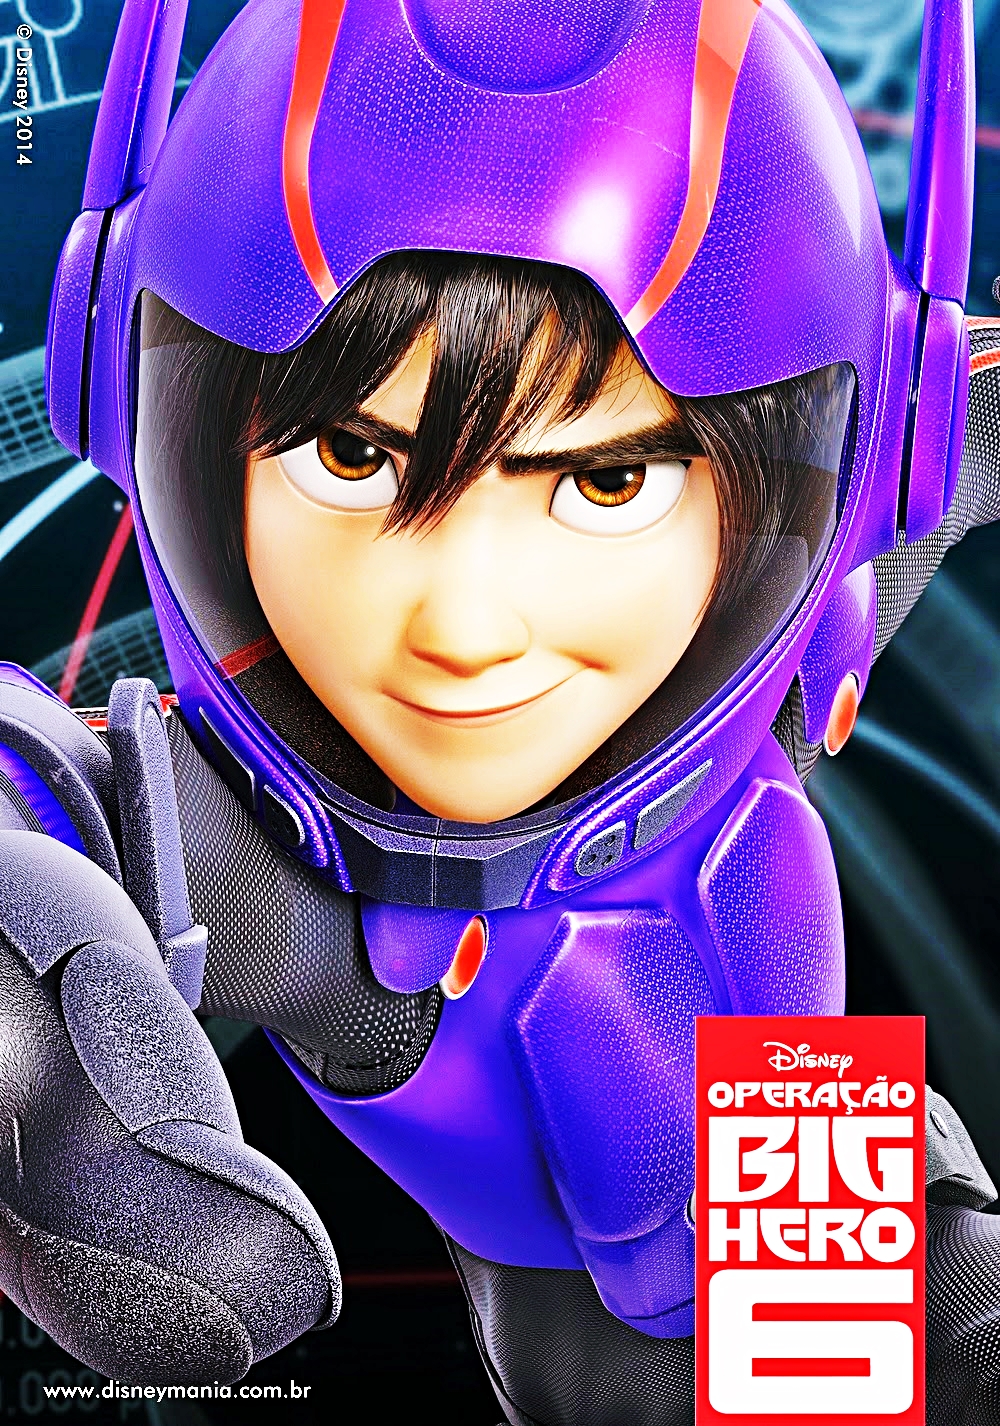 Big Hero 6 Character Posters